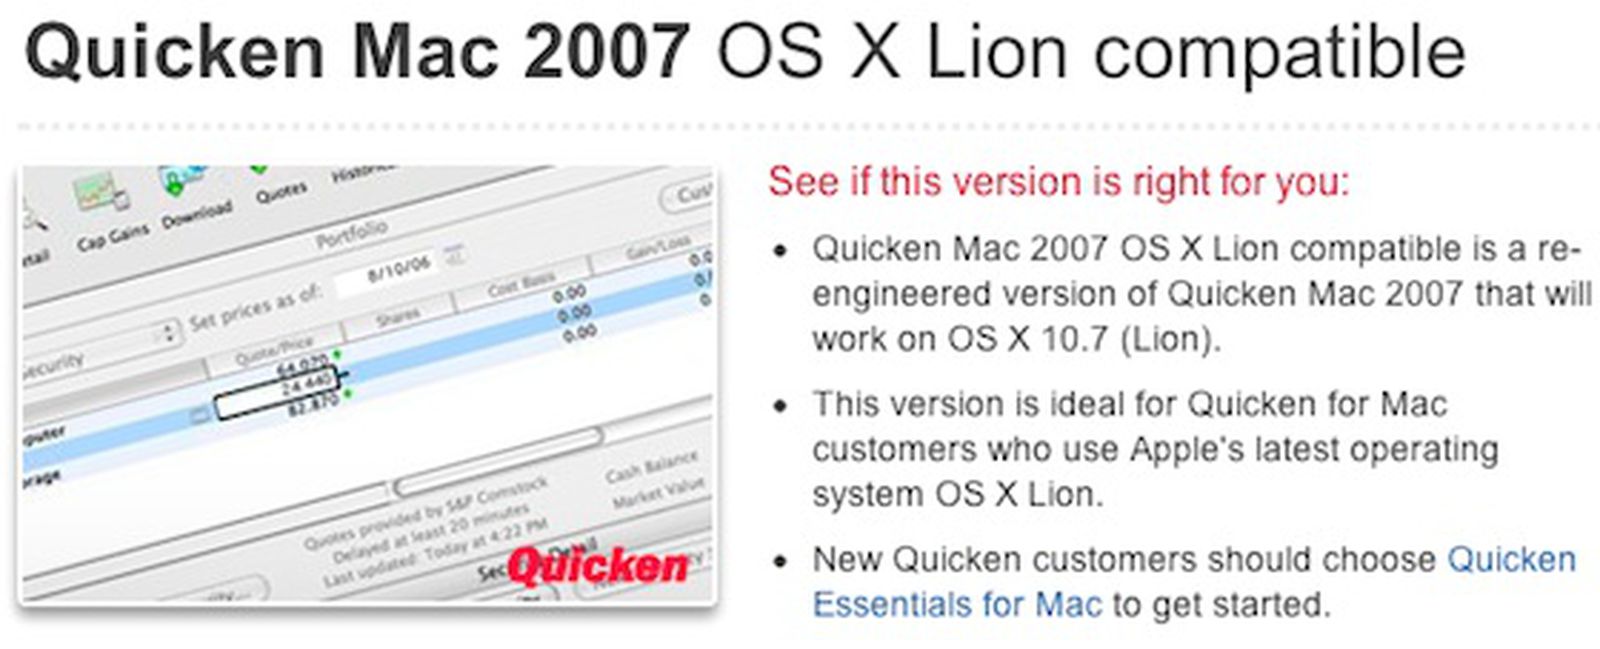 does quicken for mac 2007 work with high sierra